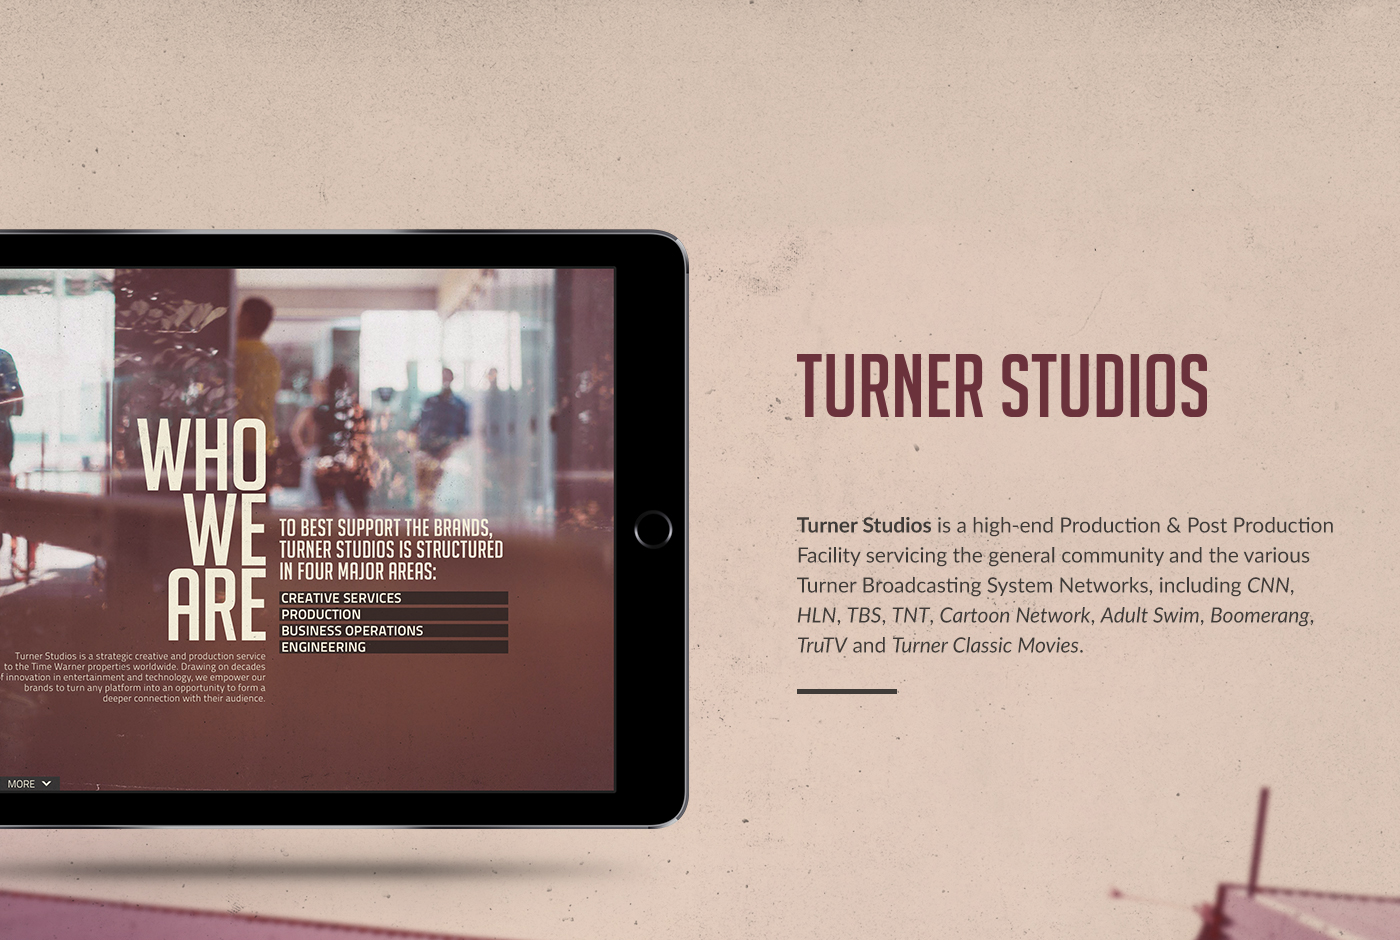 Turner Studios iPad wrecking ball DPS Digital Magazine time warner digital agencylife Webdesign videos turner broadcast Digital Publishing